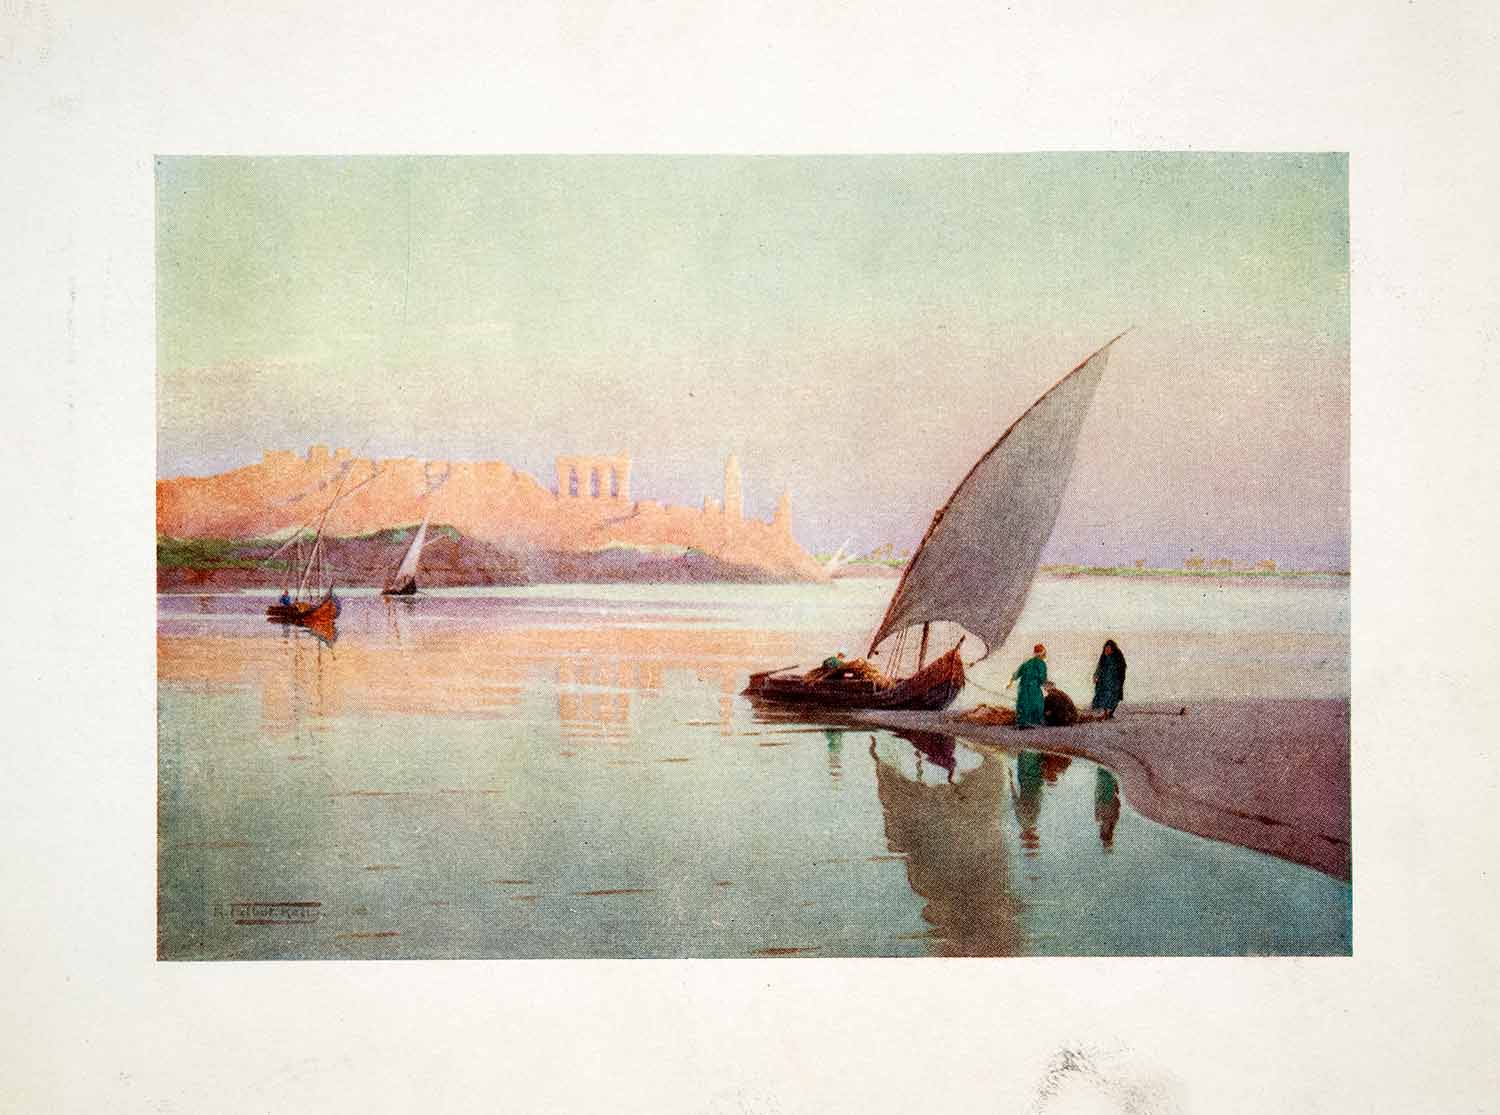 1906 Color Print Kom Ombo Temple Sukhos Haroeris Egypt Nile Robert Talbot XGOB7